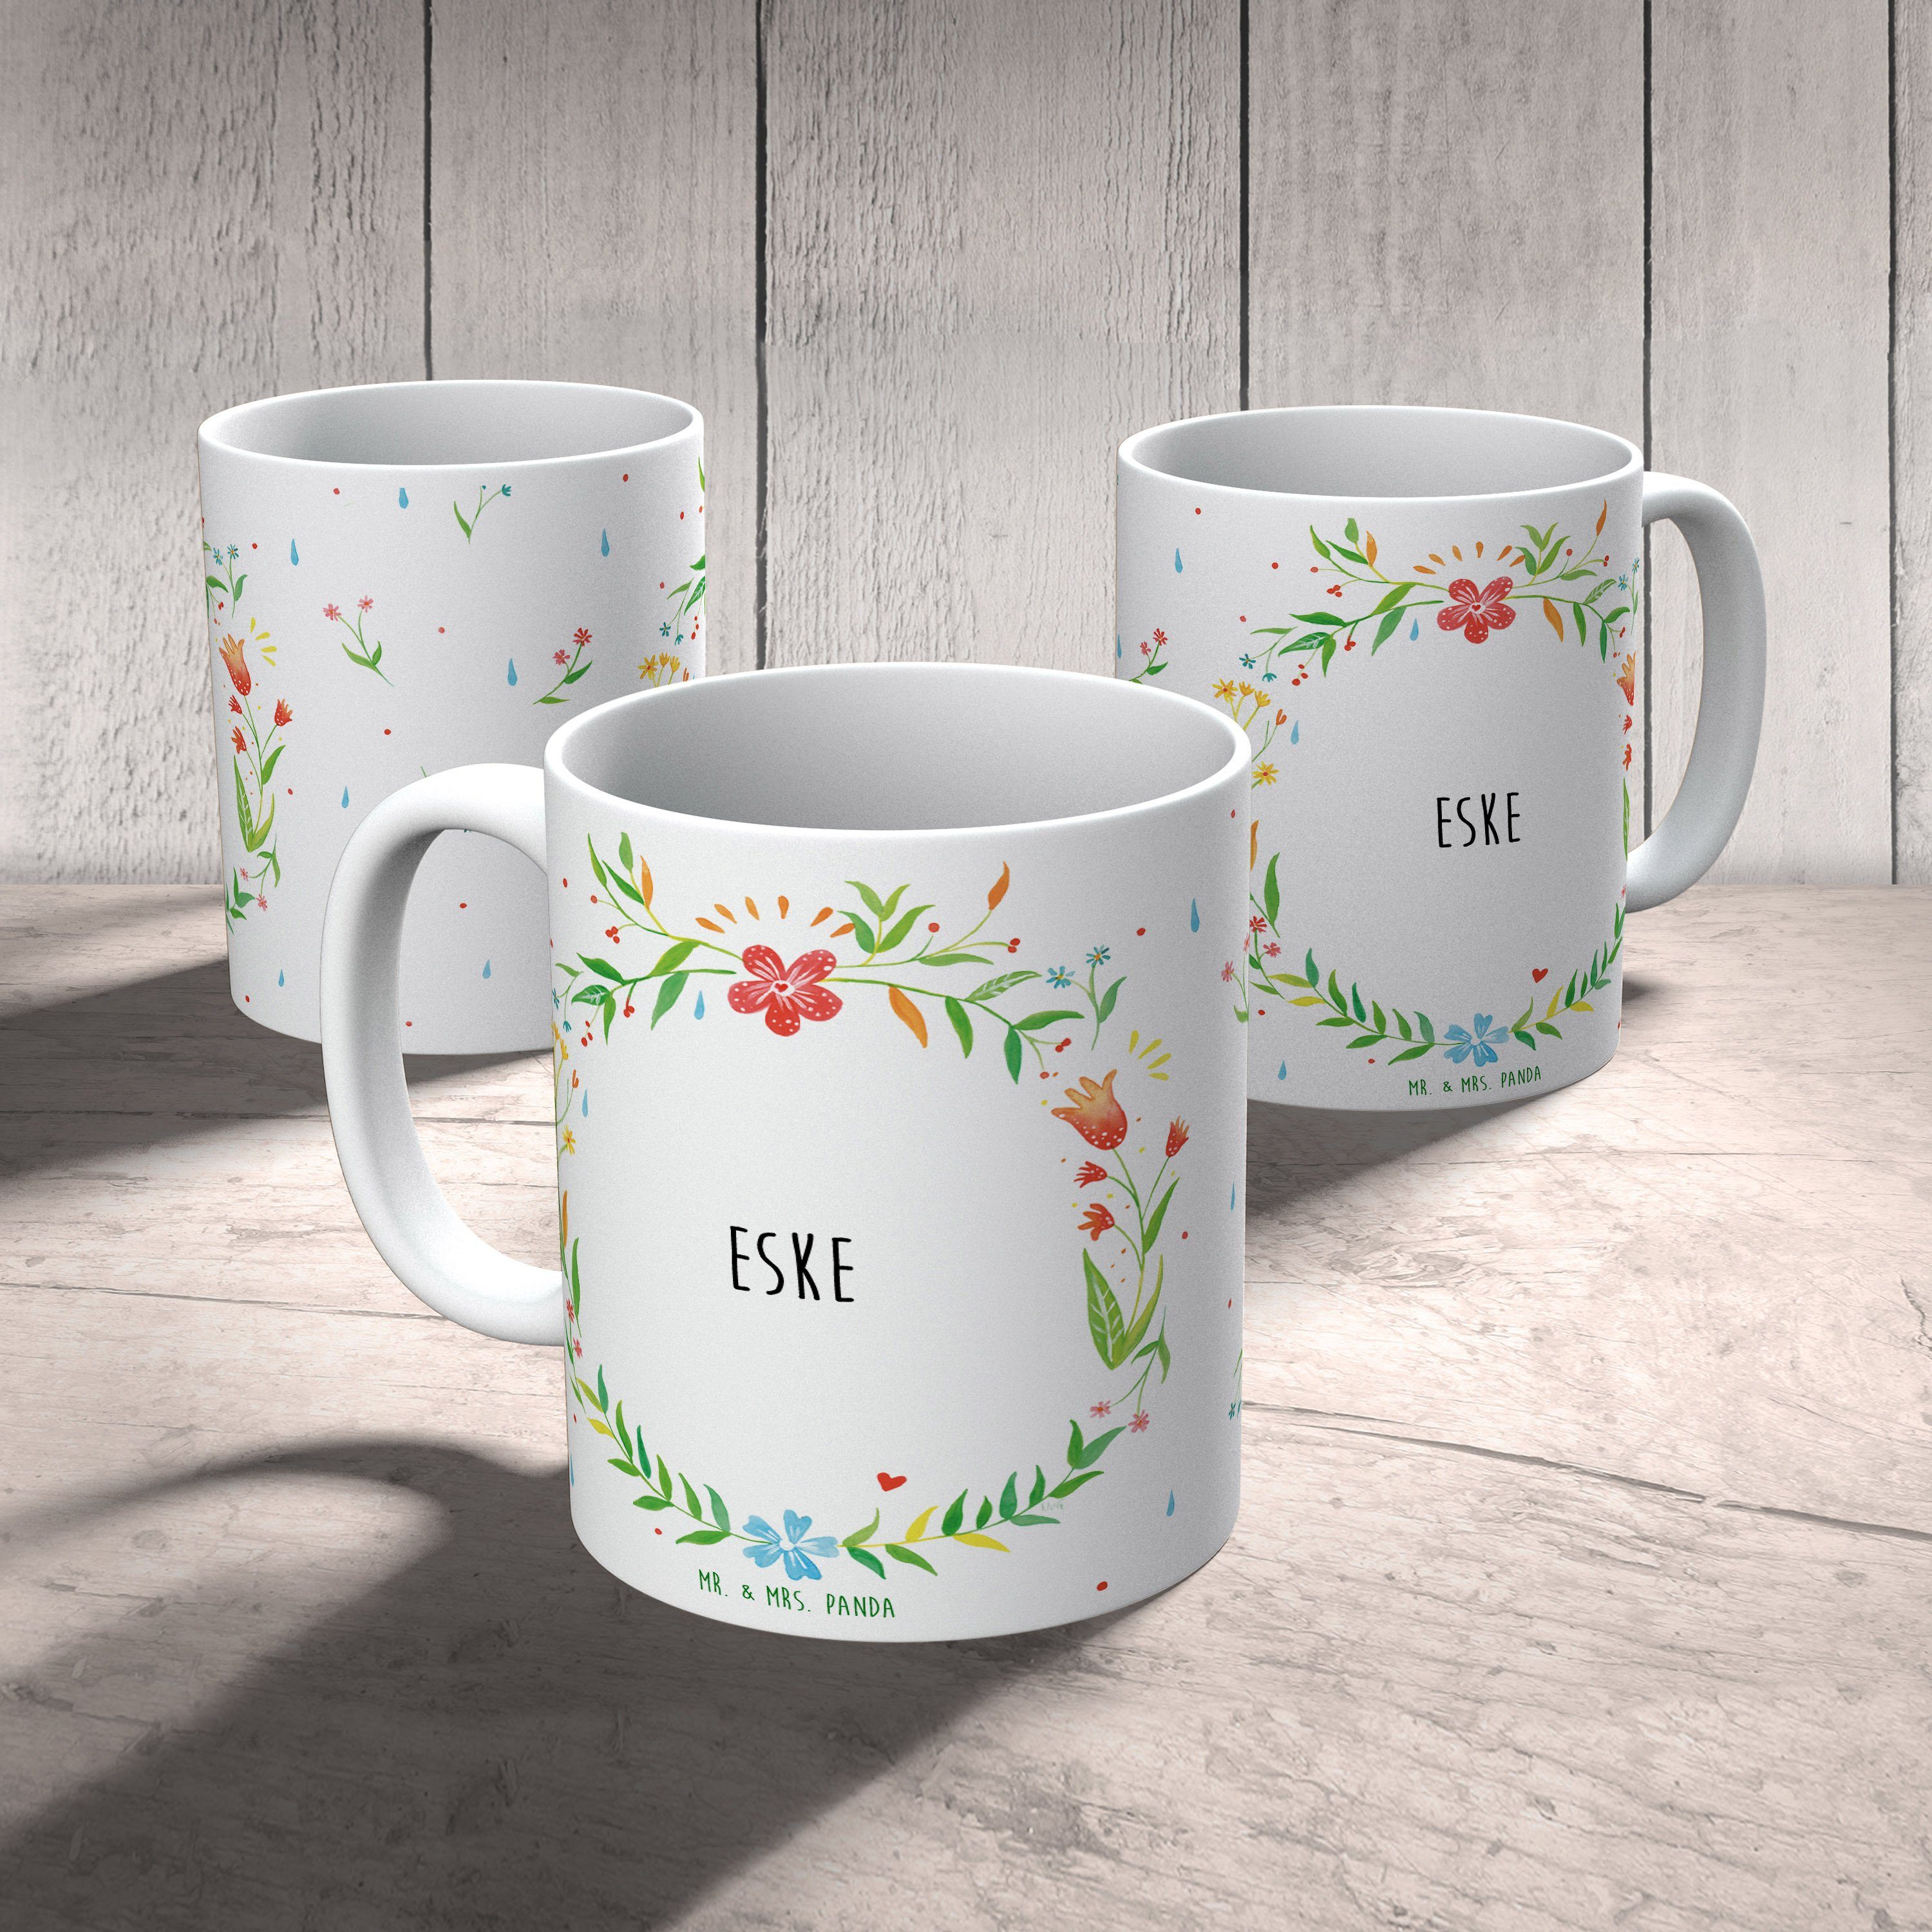 Mr. & Mrs. Panda Tasse Tasse Geschenk, Motive, Kaffe, Teebecher, Tasse, Eske Tasse Keramik - Sprüche